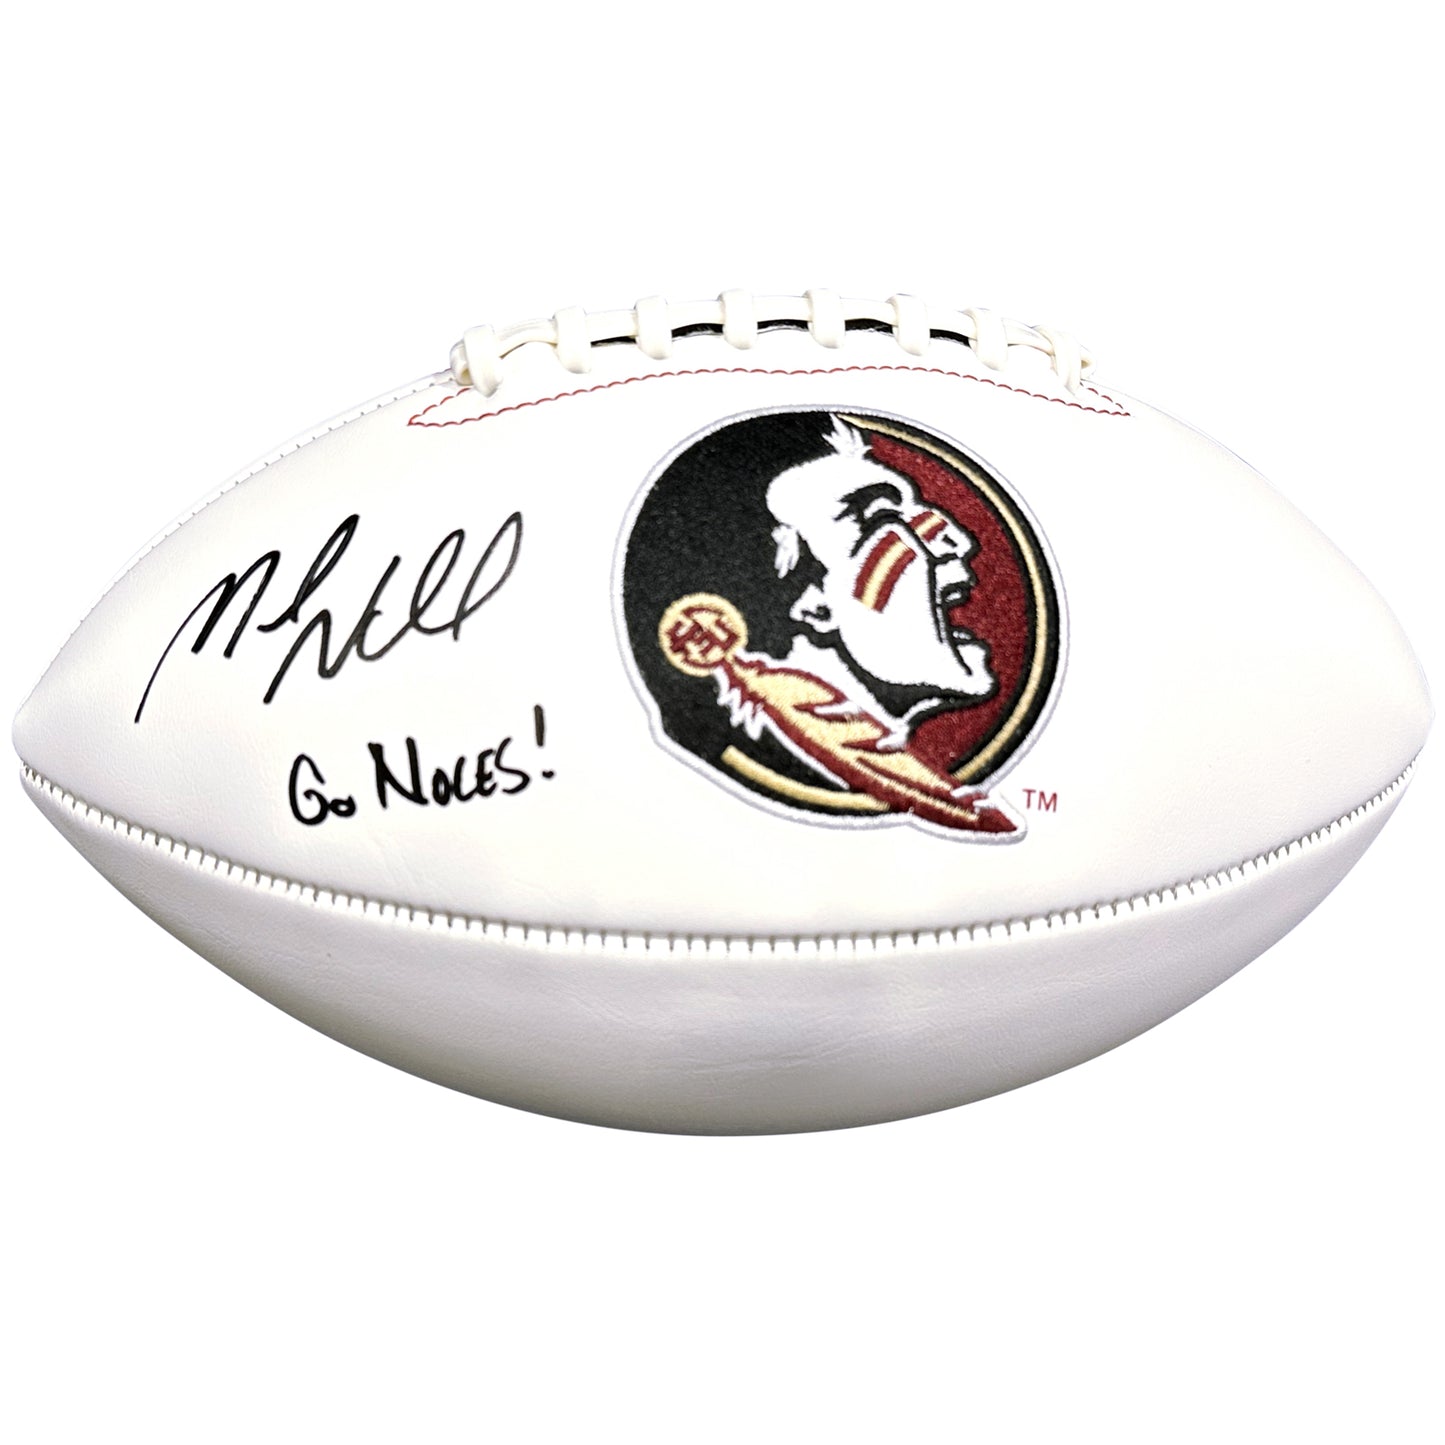 Mike Norvell Autographed Florida State FSU Seminoles Logo Football w/ "Go Noles" - JSA